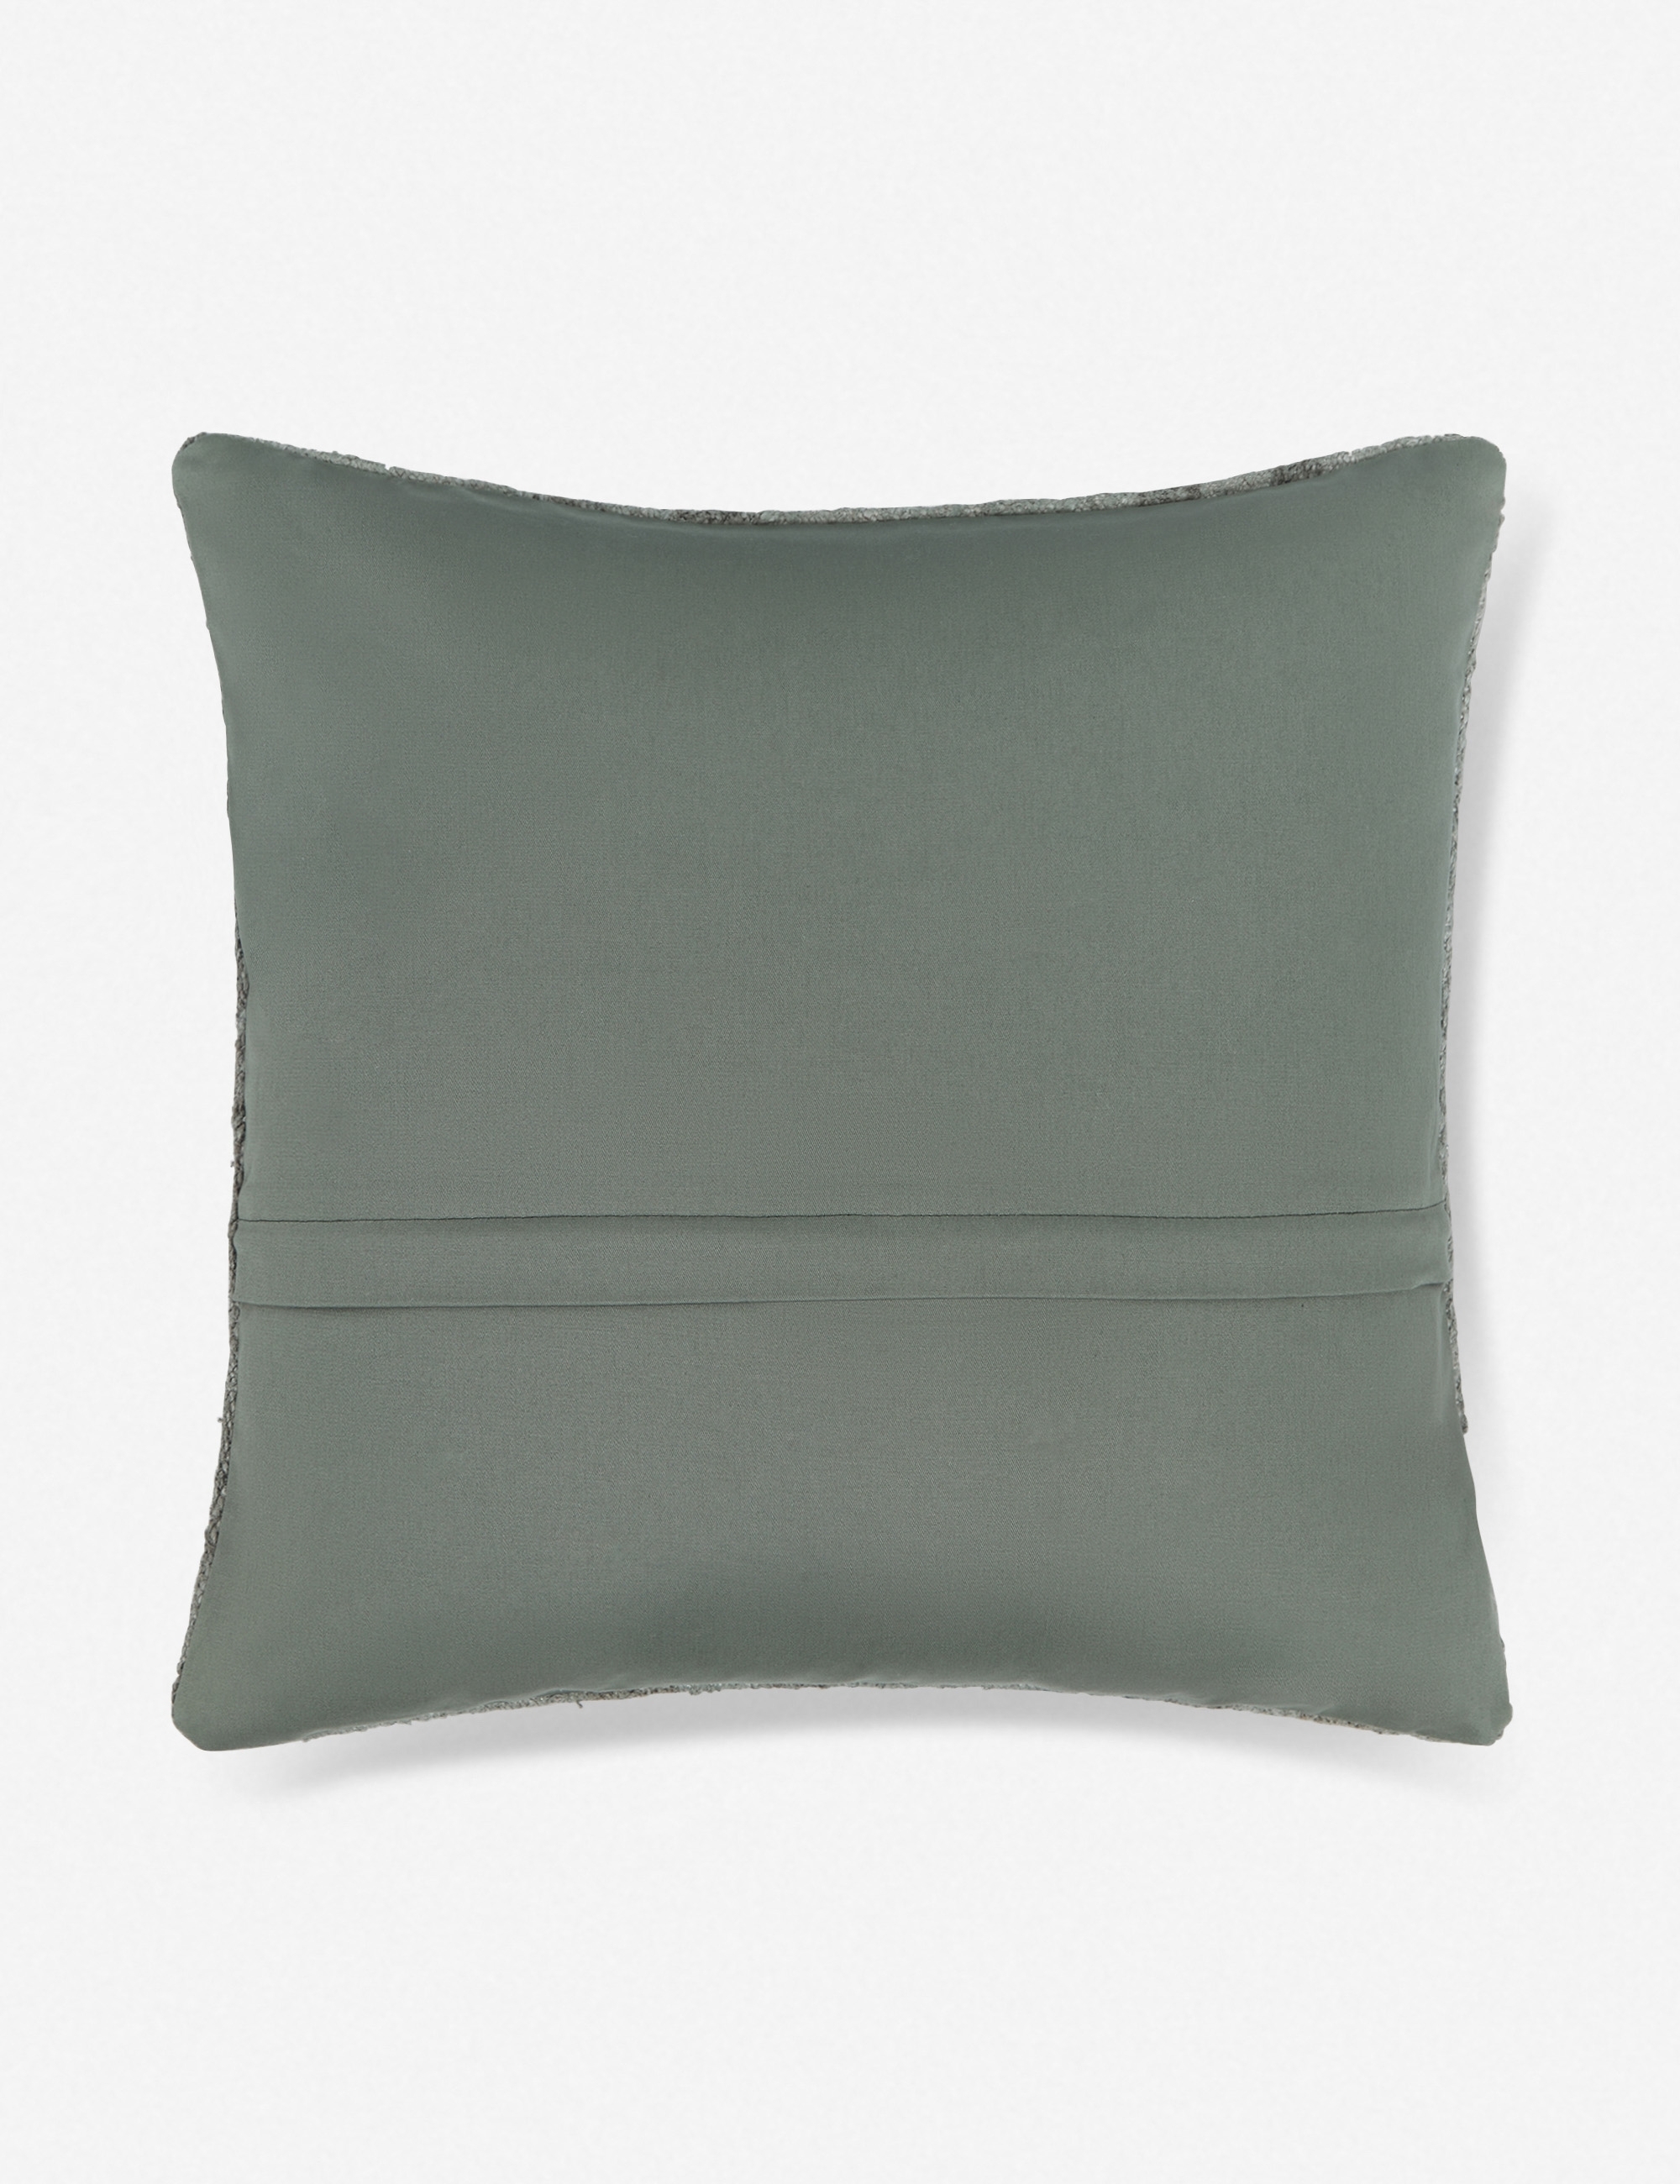 Syren Vintage Hemp Pillow - Image 2